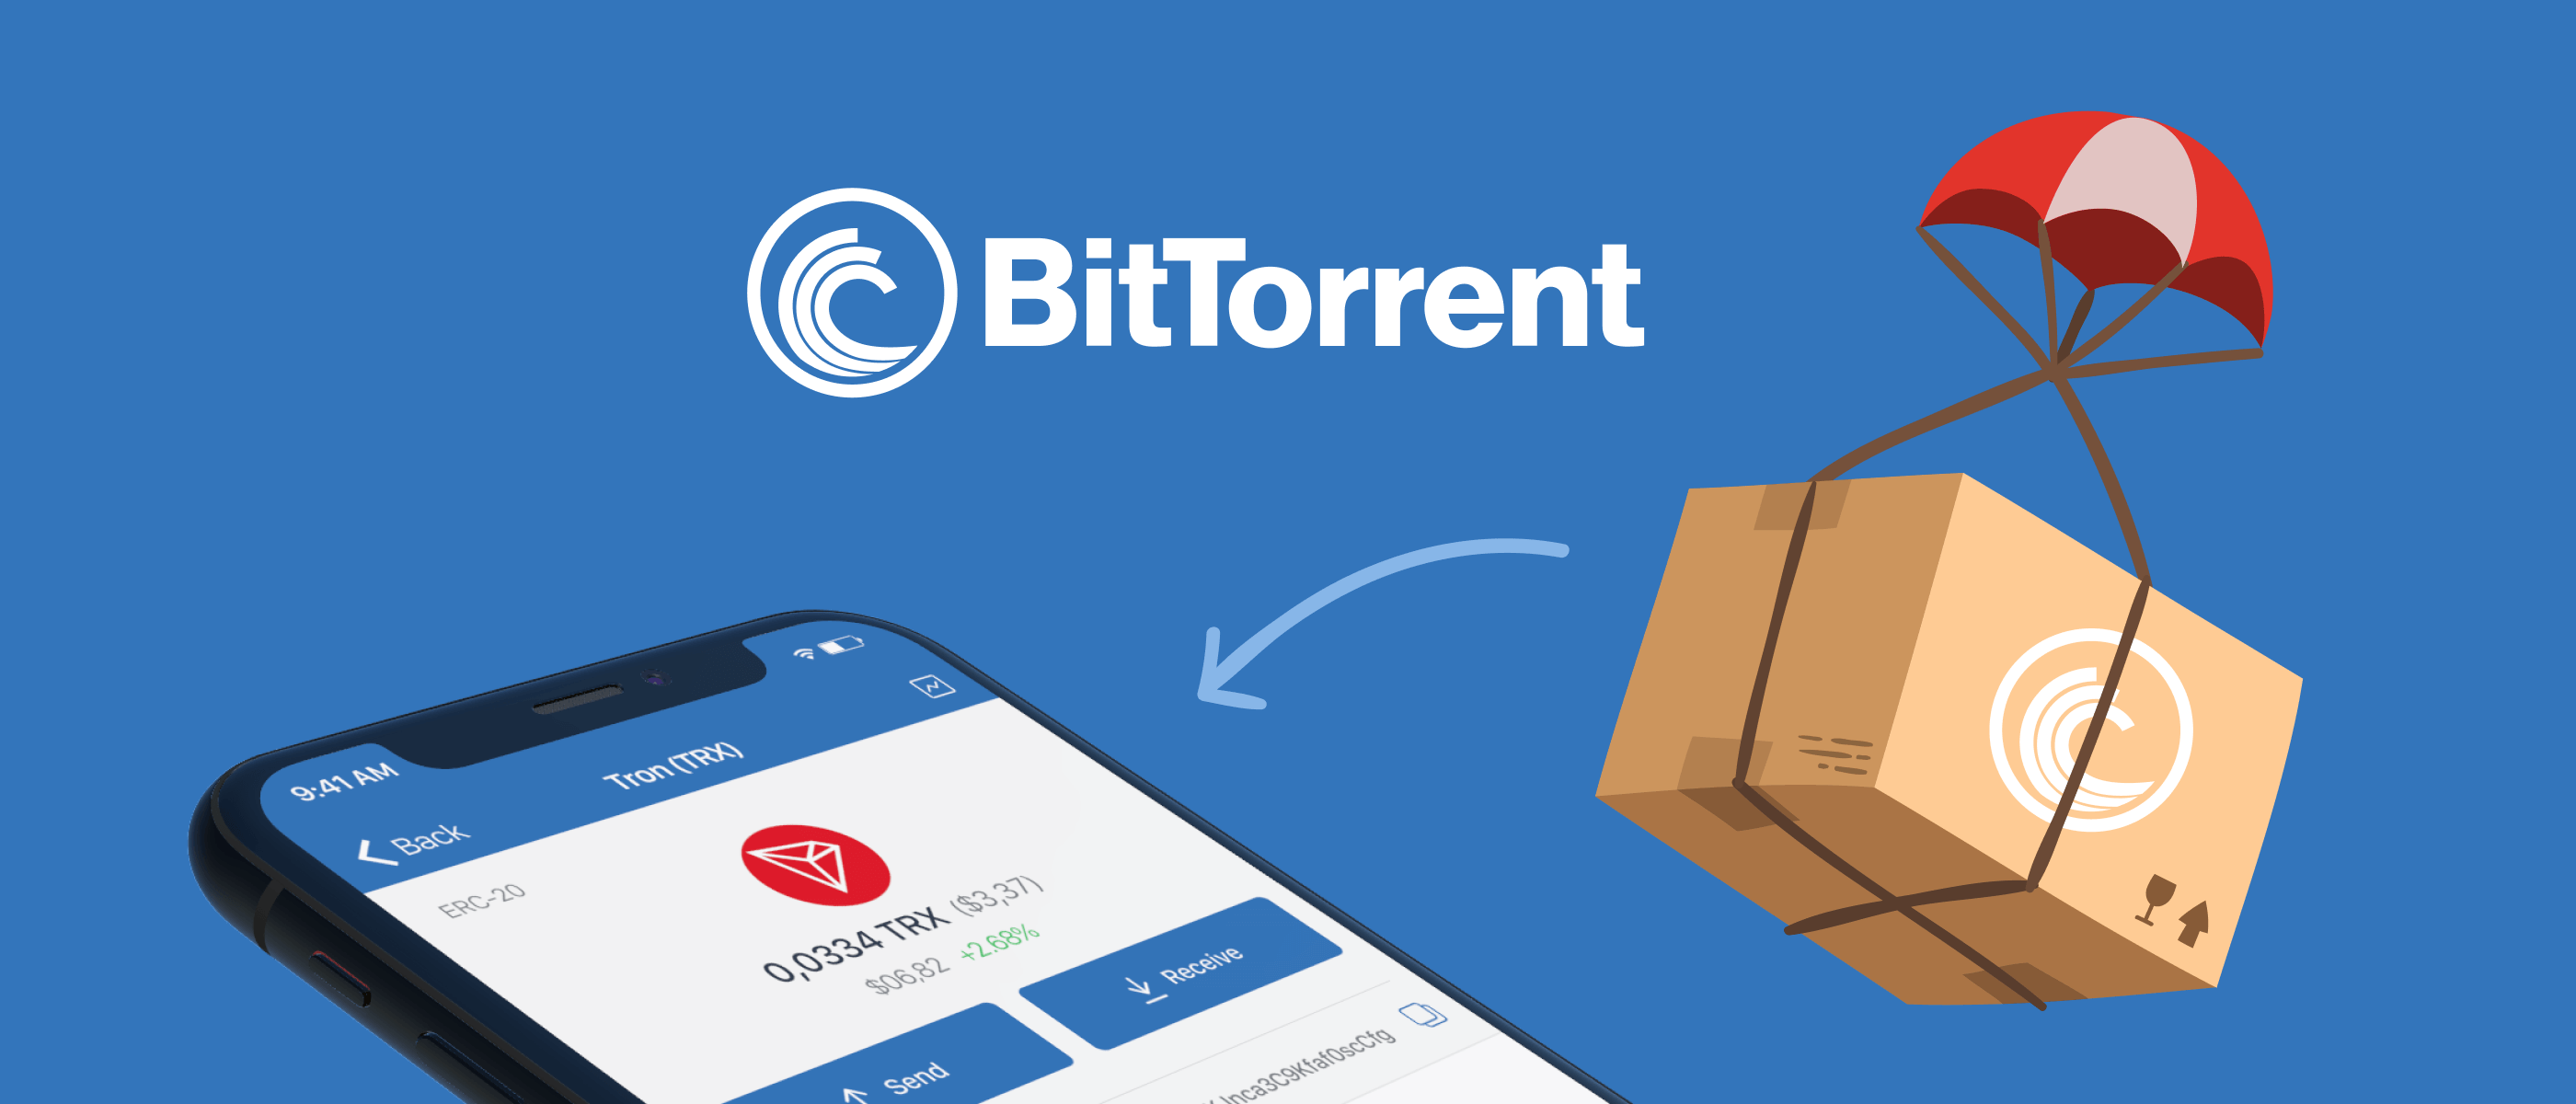 Details of the BitTorrent (BTT) Airdrop for TRON (TRX) Holders | OKX